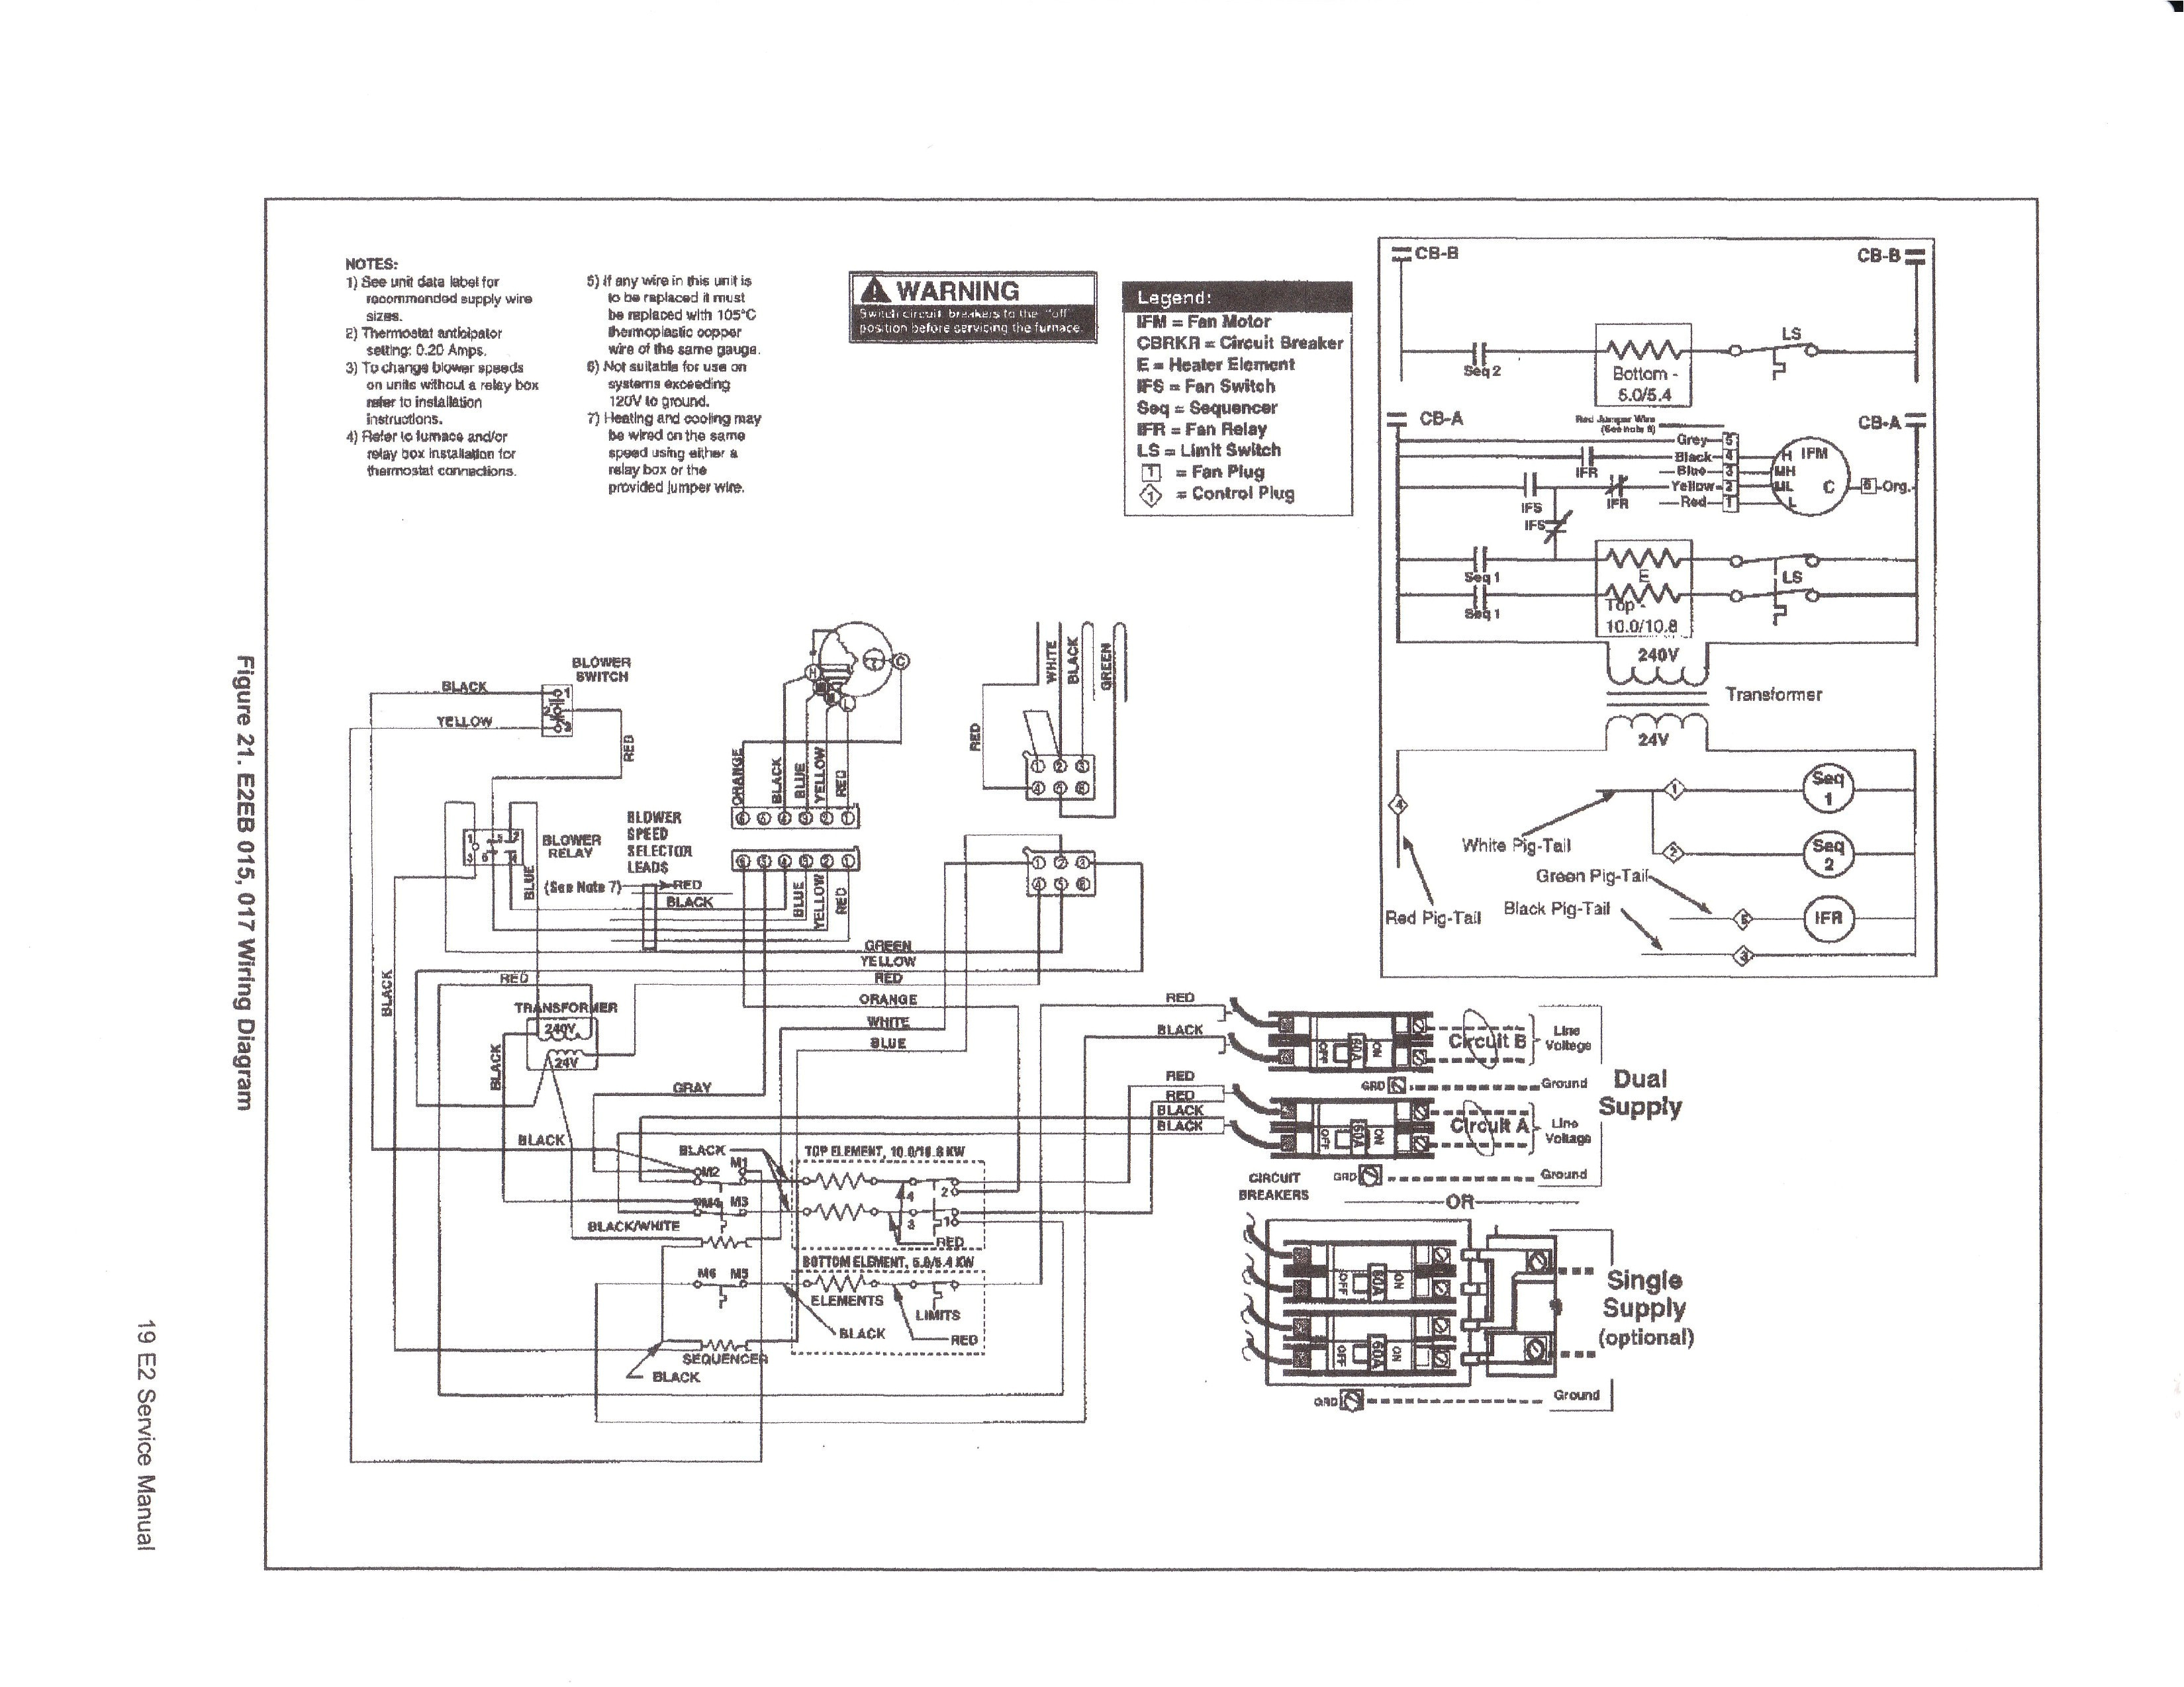 intertherm 7 wire thermostat wiring diagram freebootstrapthemes co u2022intertherm 7 wire thermostat wiring diagram wiring